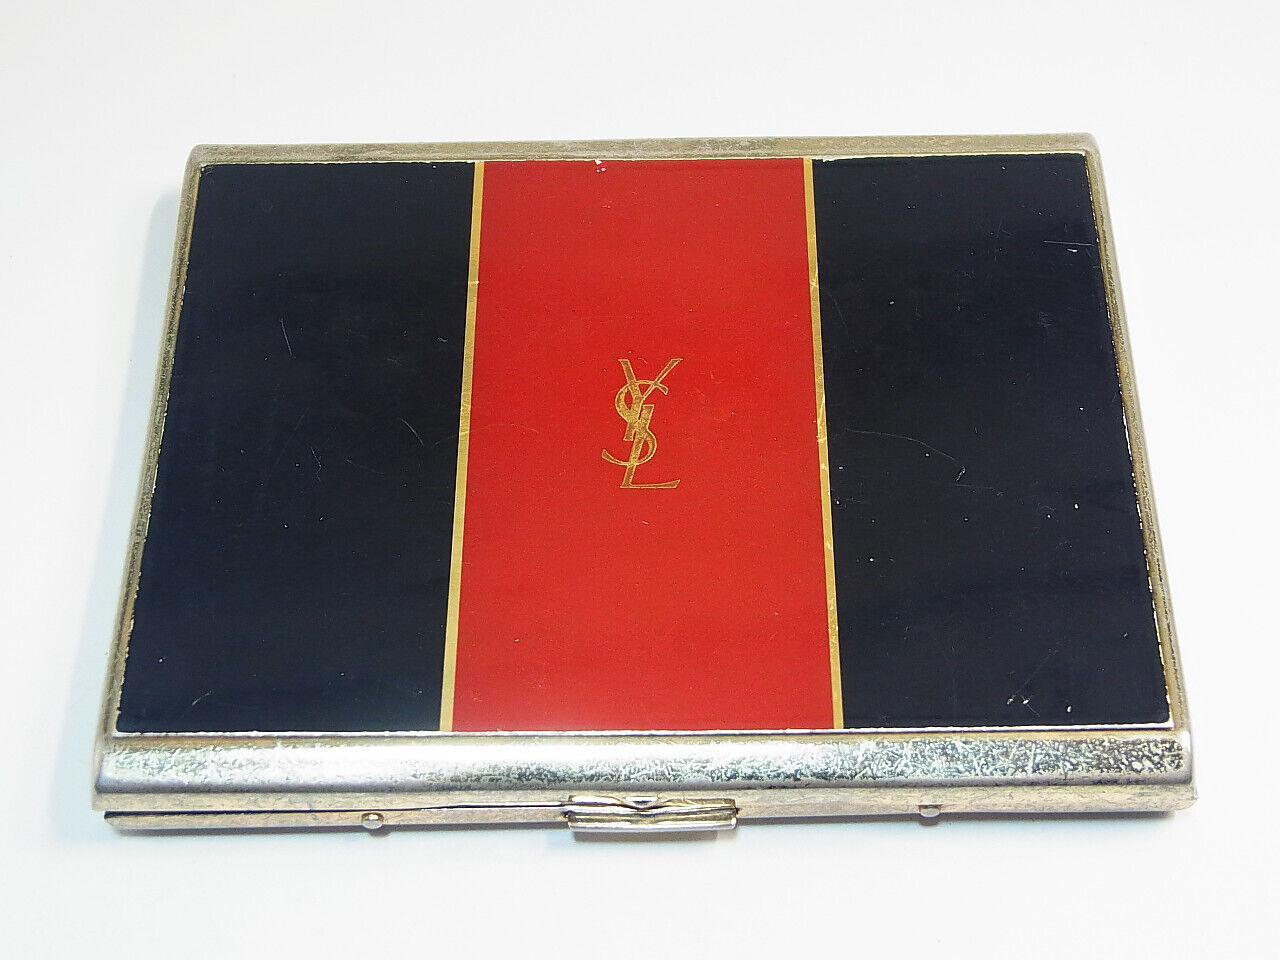 Auth Yves Saint Laurent YSL Cigarette Case Card Holder Red Black Gold